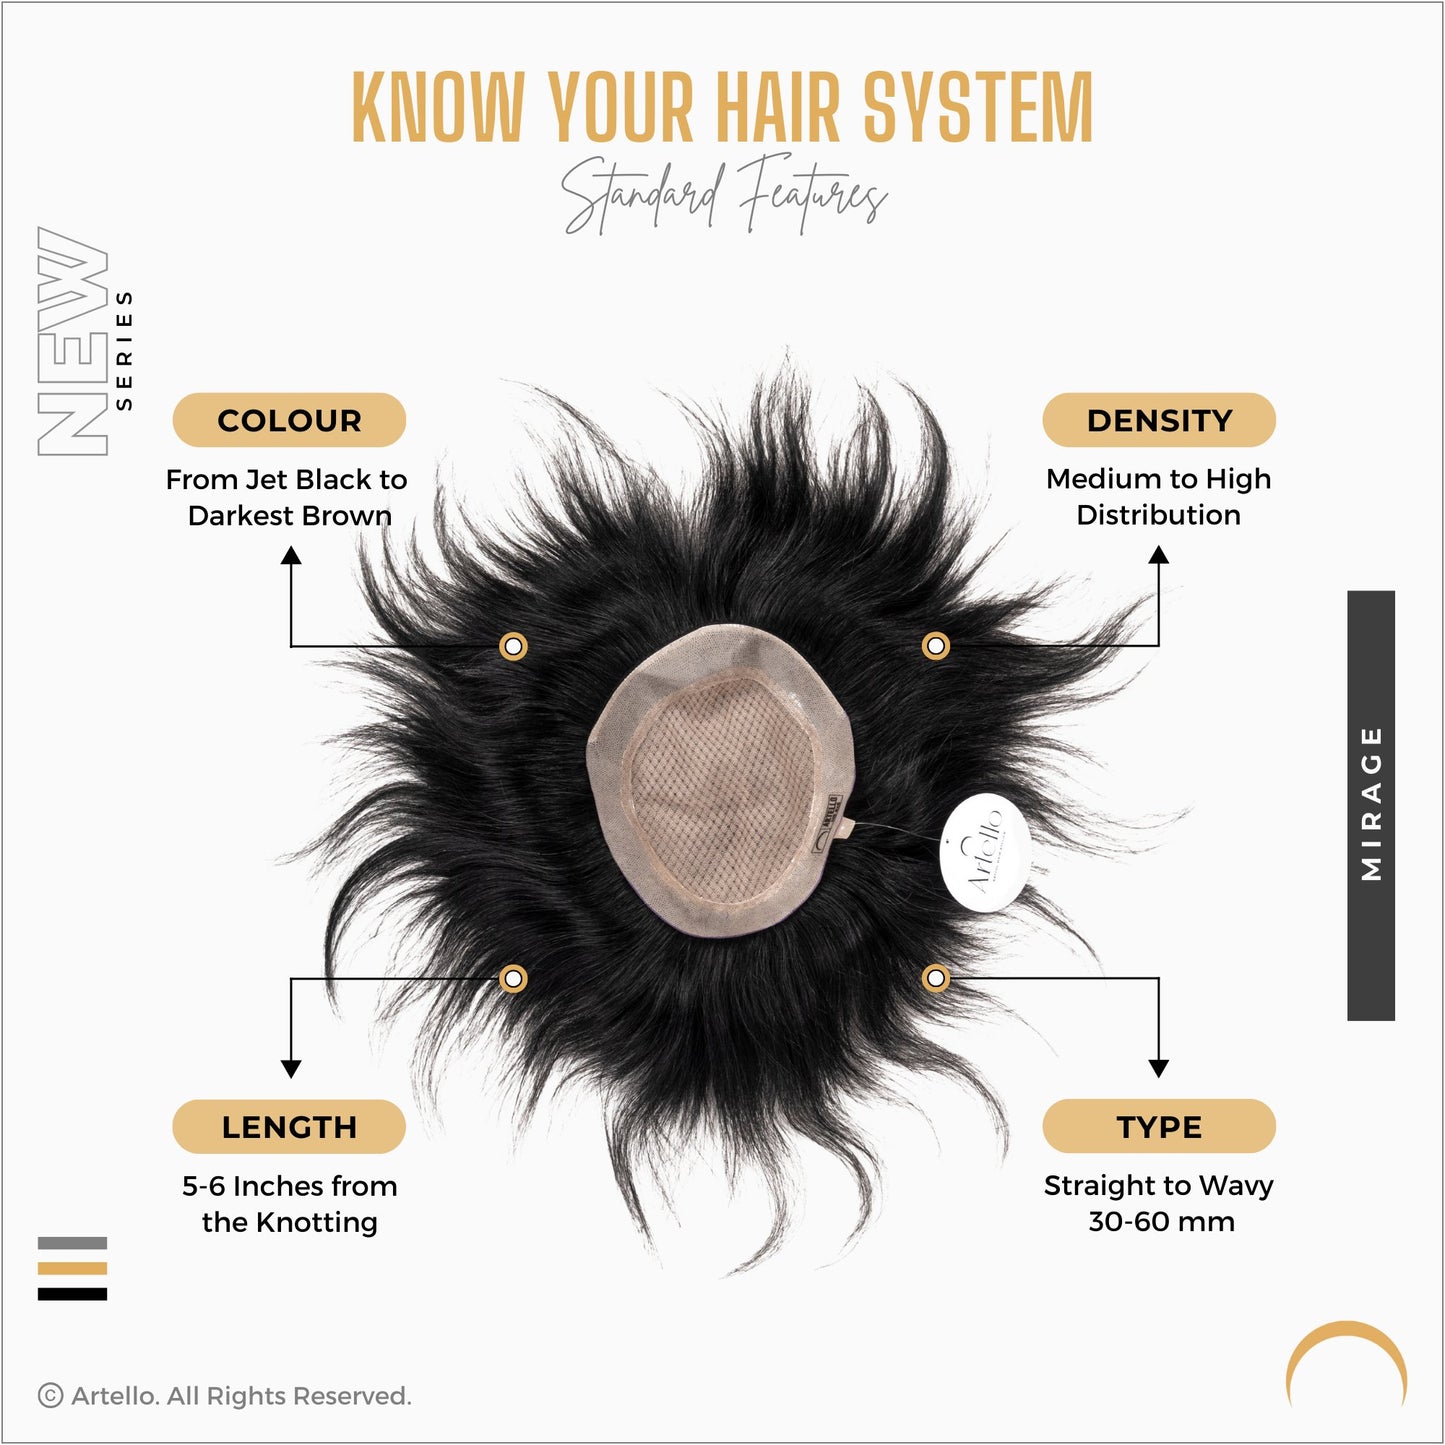 Artello® MIRAGE Hair Patch for Men - ArtelloHair Patch